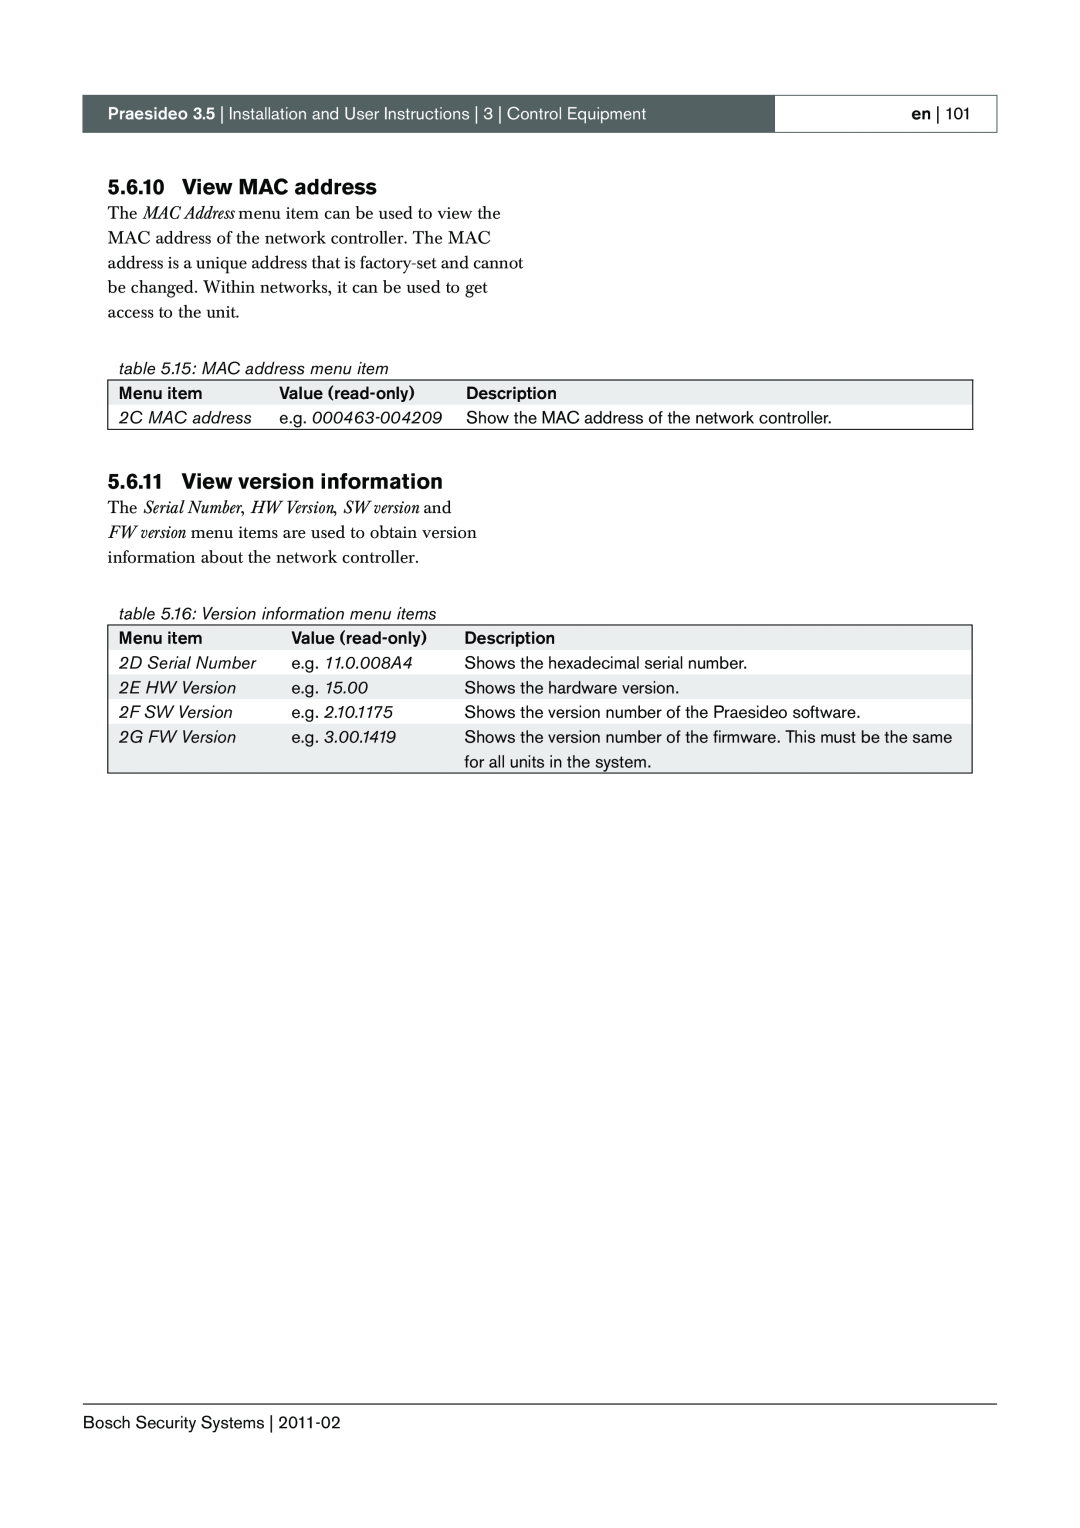 Bosch Appliances 3.5 View MAC address, View version information, 15: MAC address menu item, 2C MAC address, 2E HW Version 